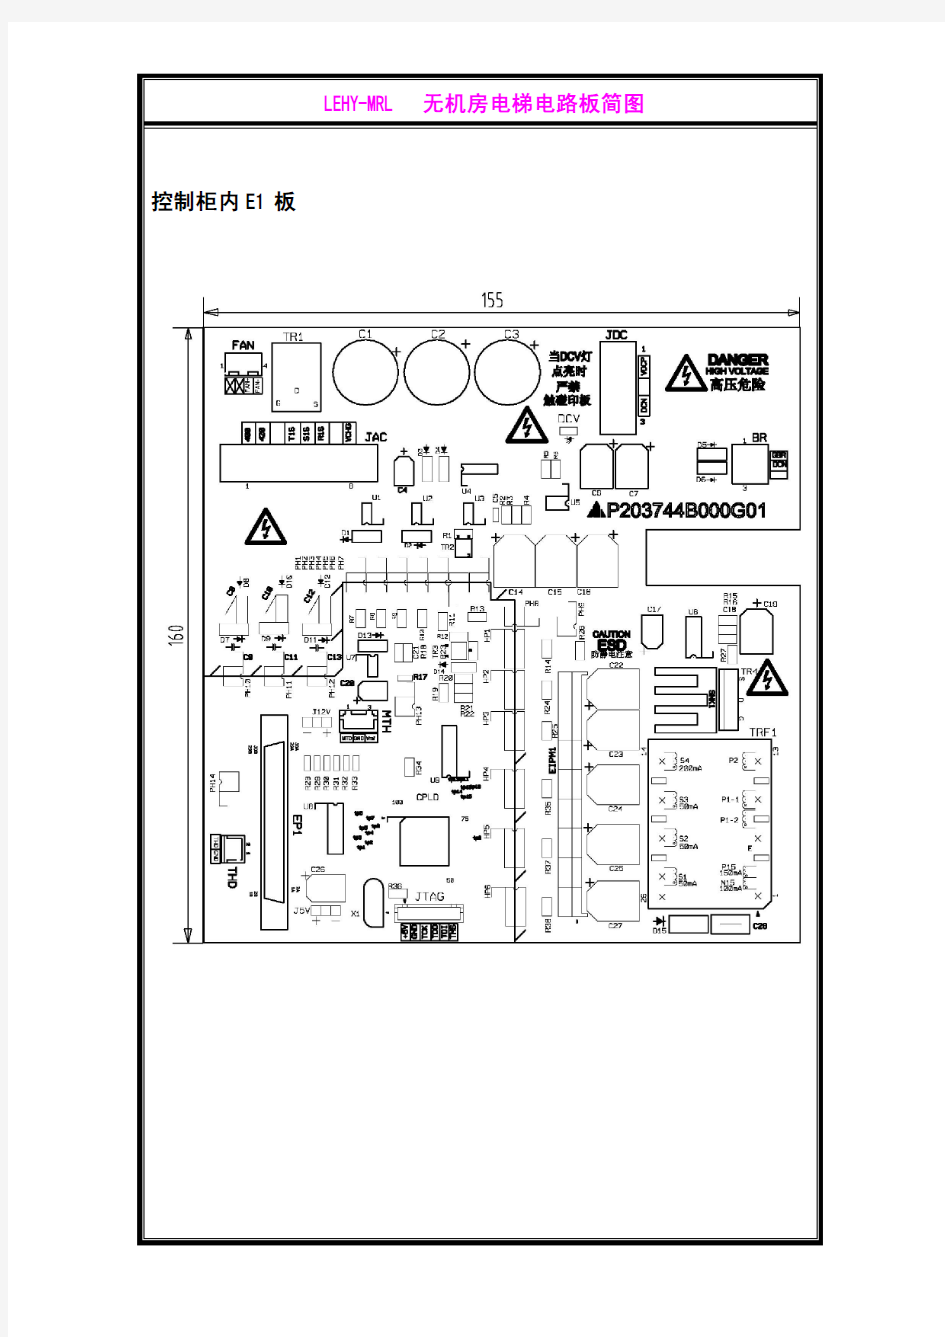 LEHY-MRL无机房电梯电路板简图